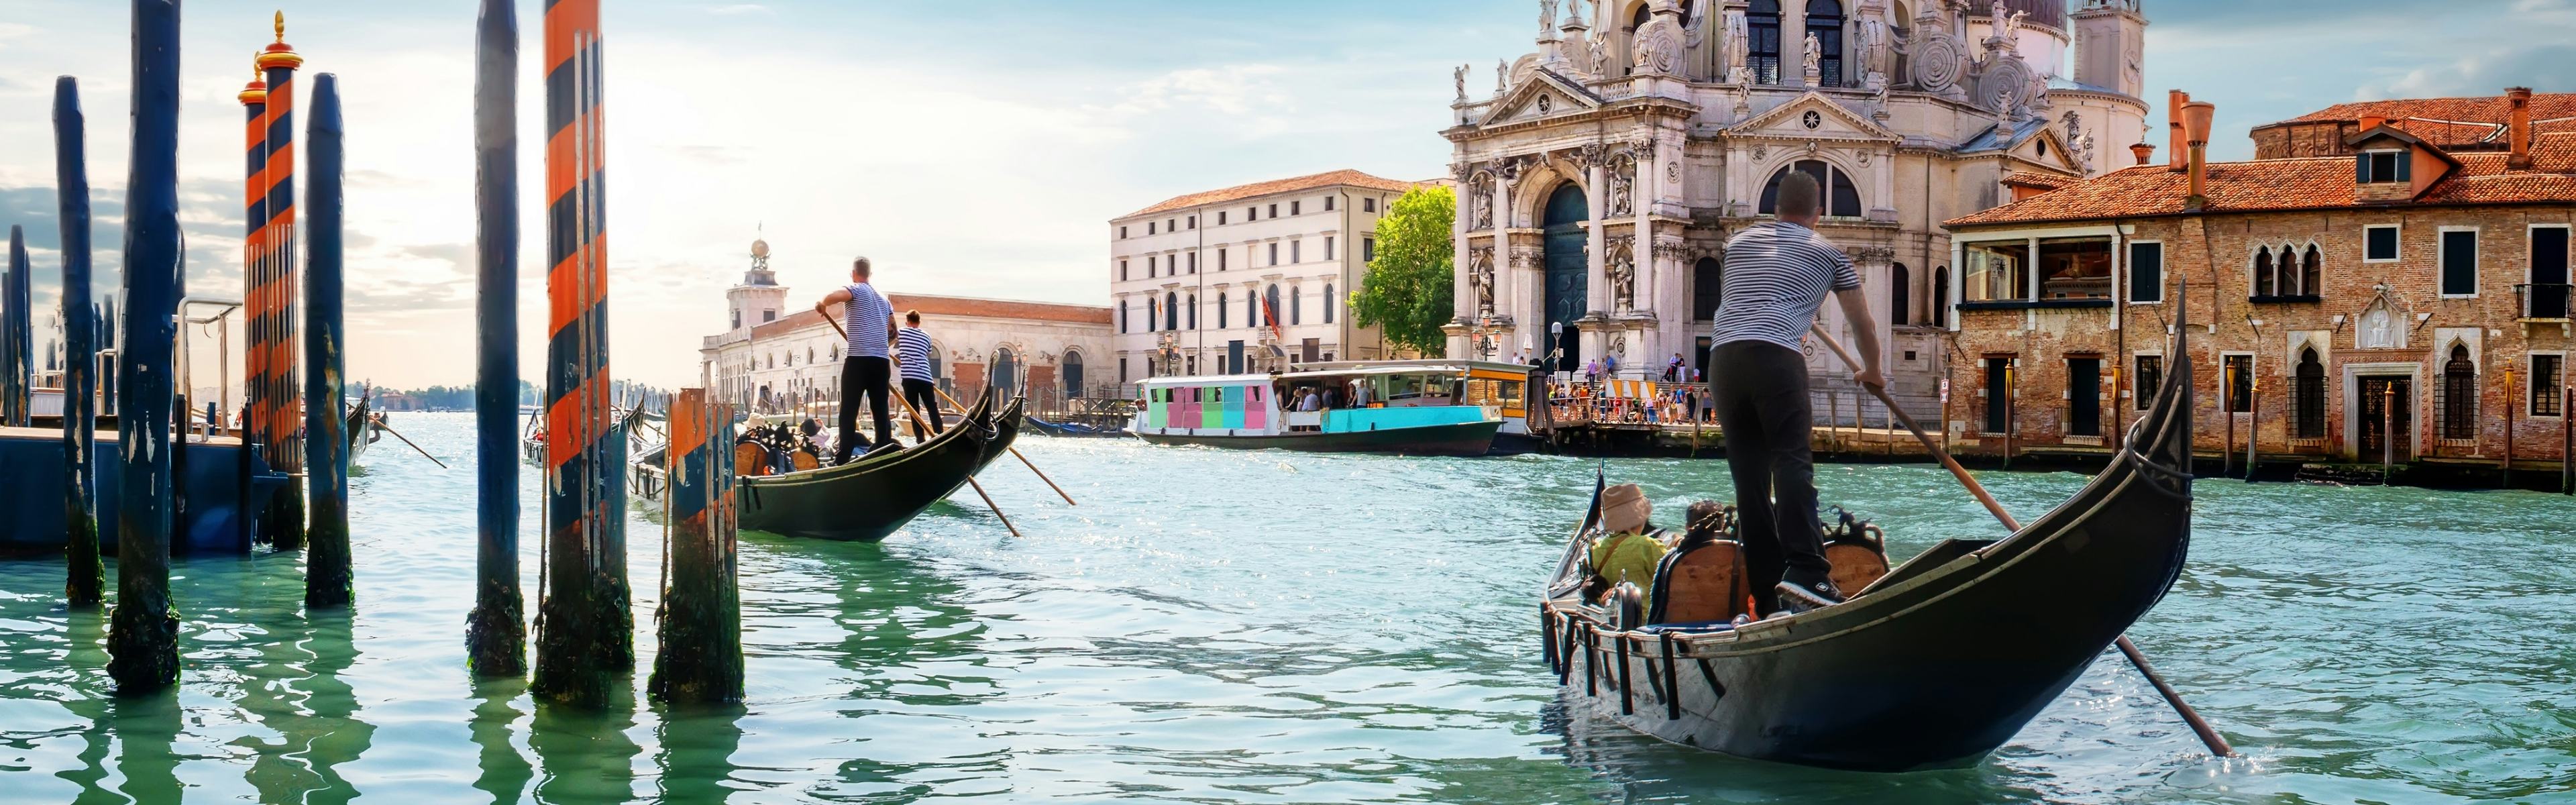 Gondolas going through Venice